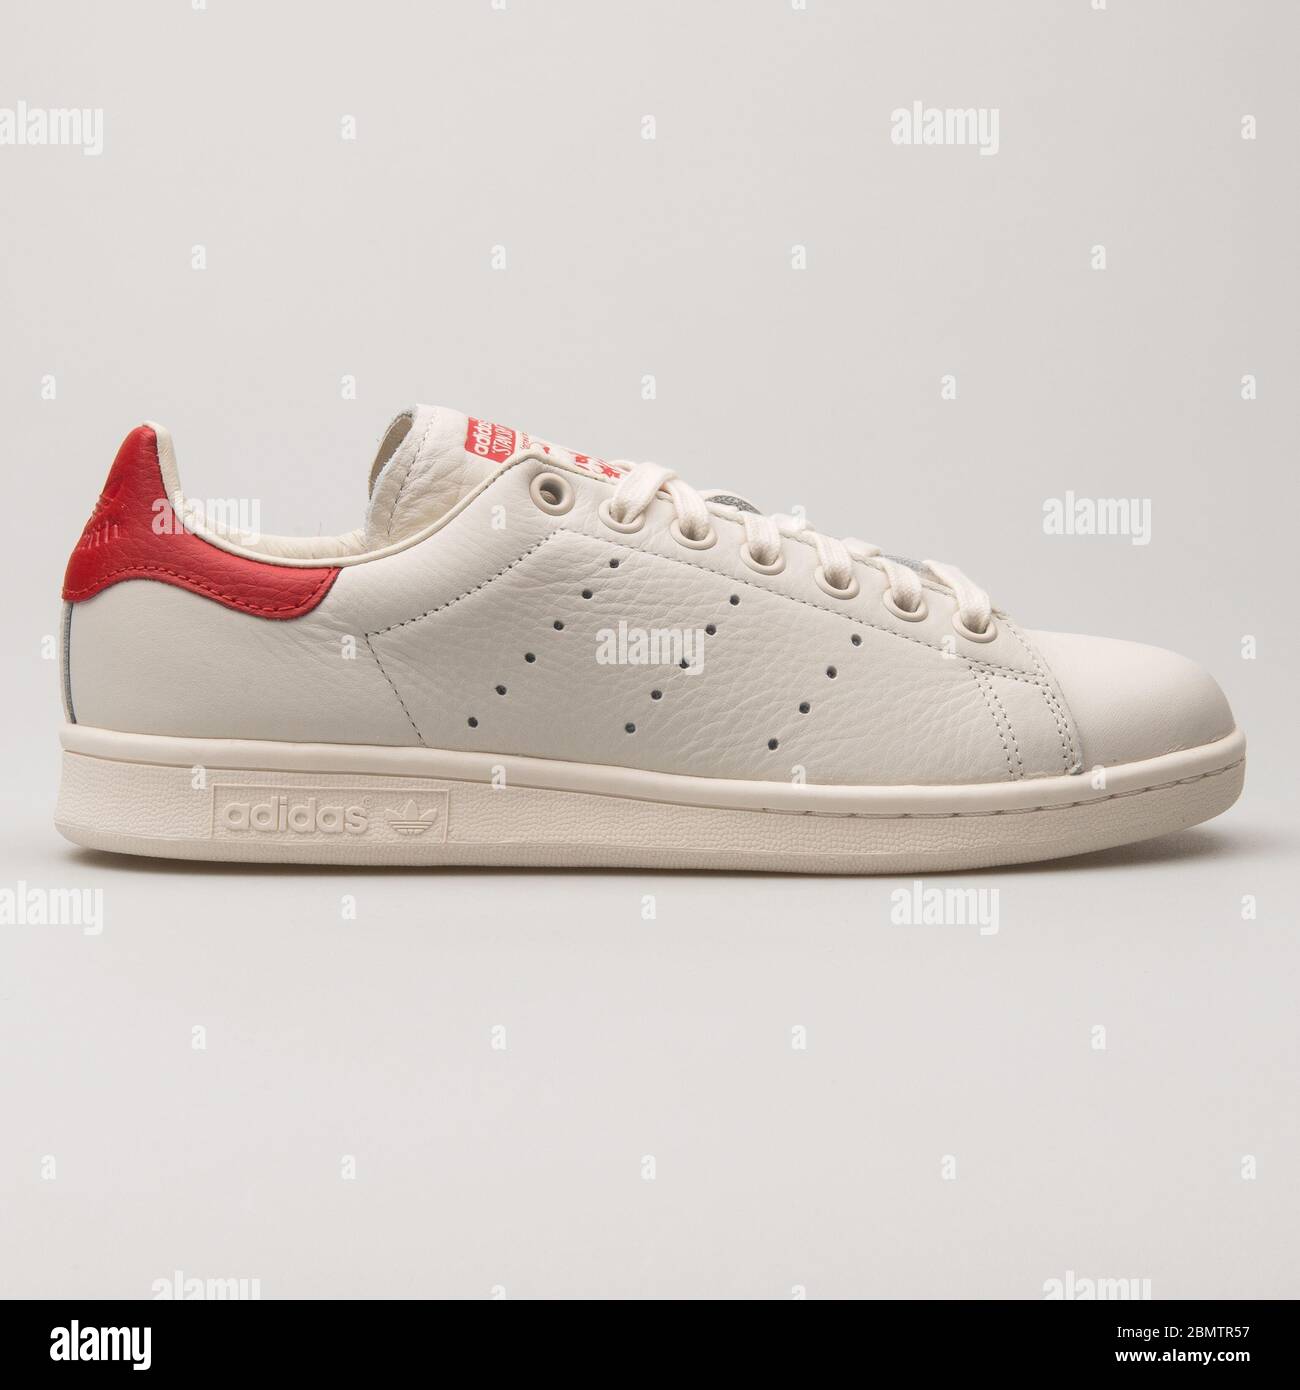 VIENNA, AUSTRIA - MAY 27, 2018: Adidas Stan Smith white and red sneaker on  white background Stock Photo - Alamy